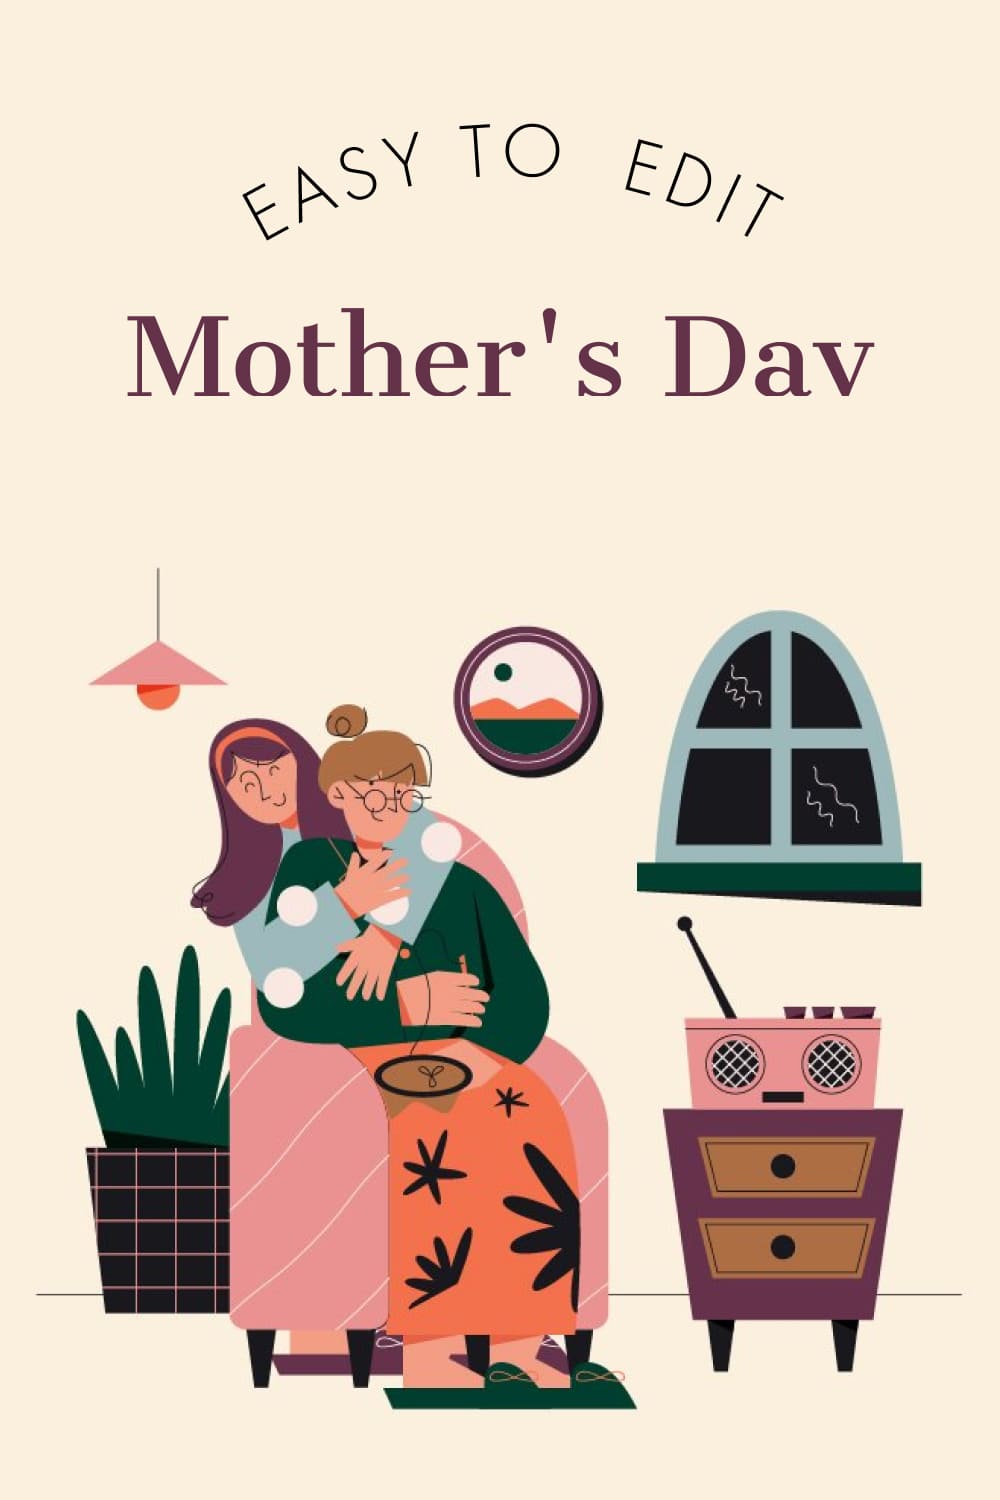 Mother's Day Illustration - Pinterest.